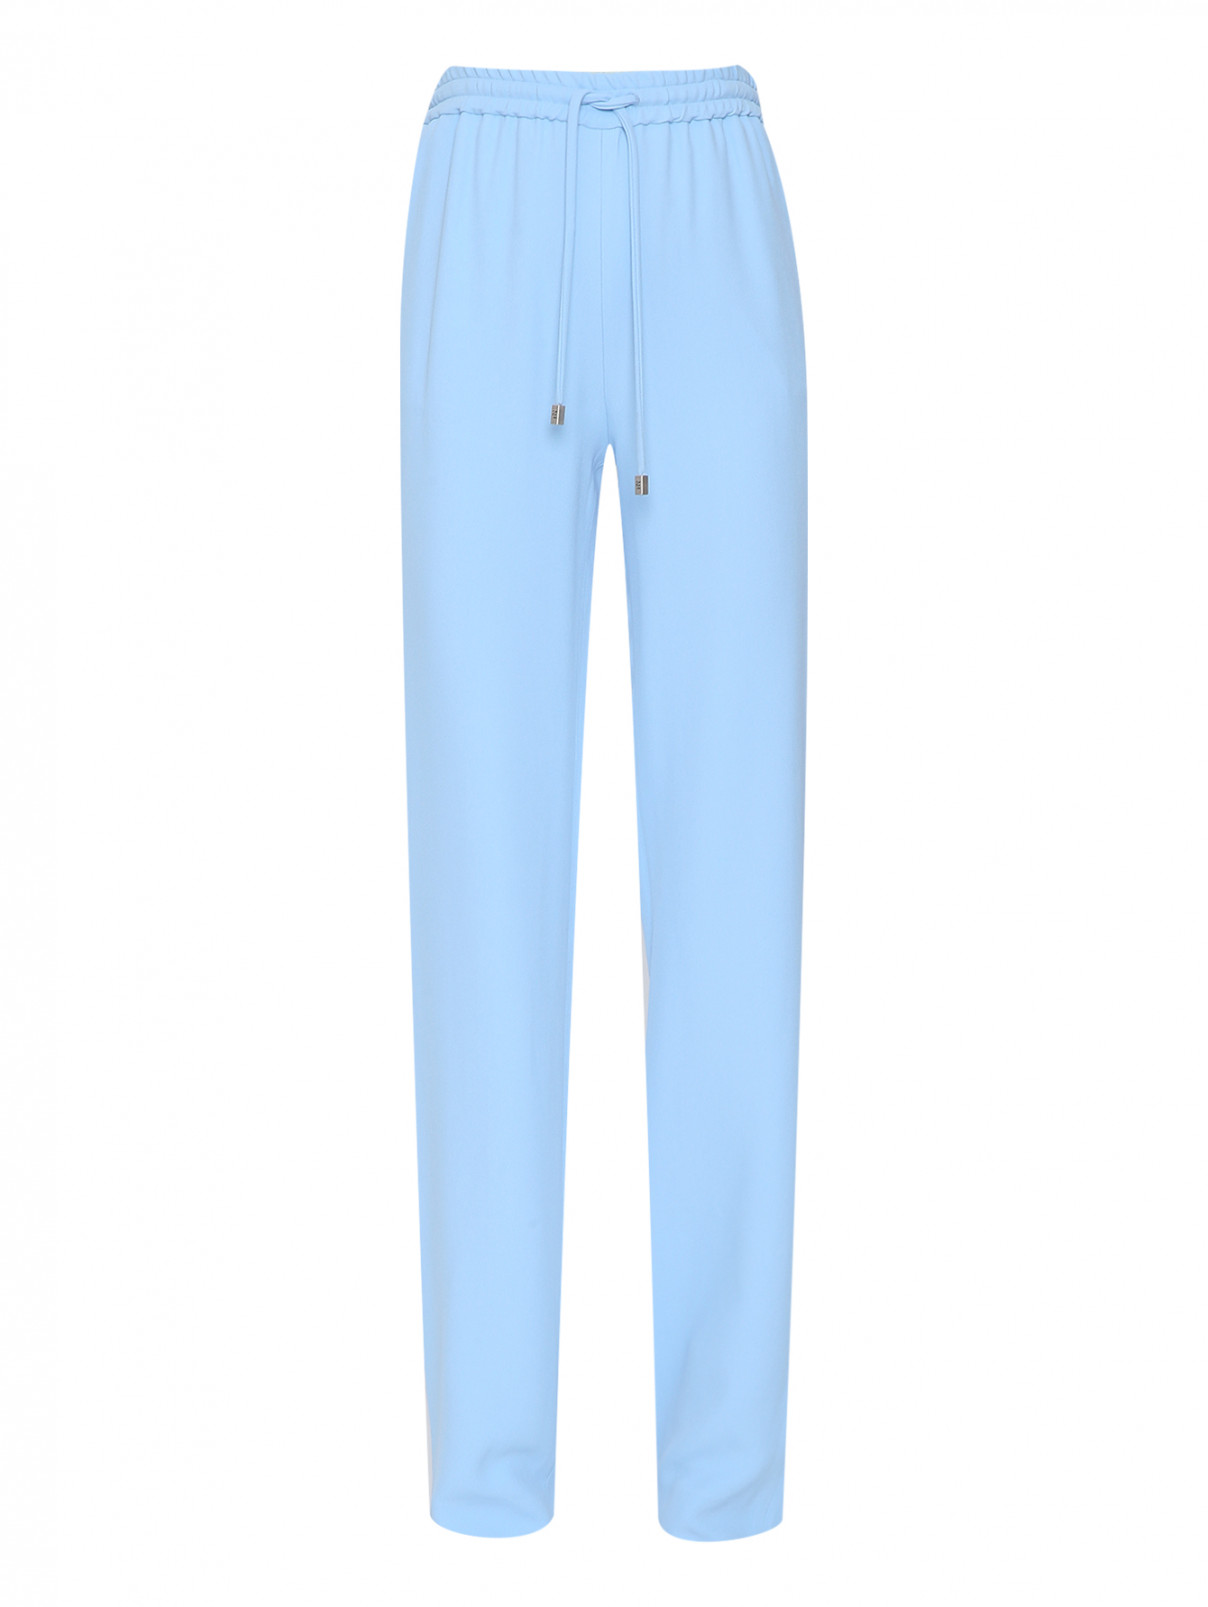 Широкие брюки на резинке Ermanno Scervino  –  Общий вид  – Цвет:  Синий